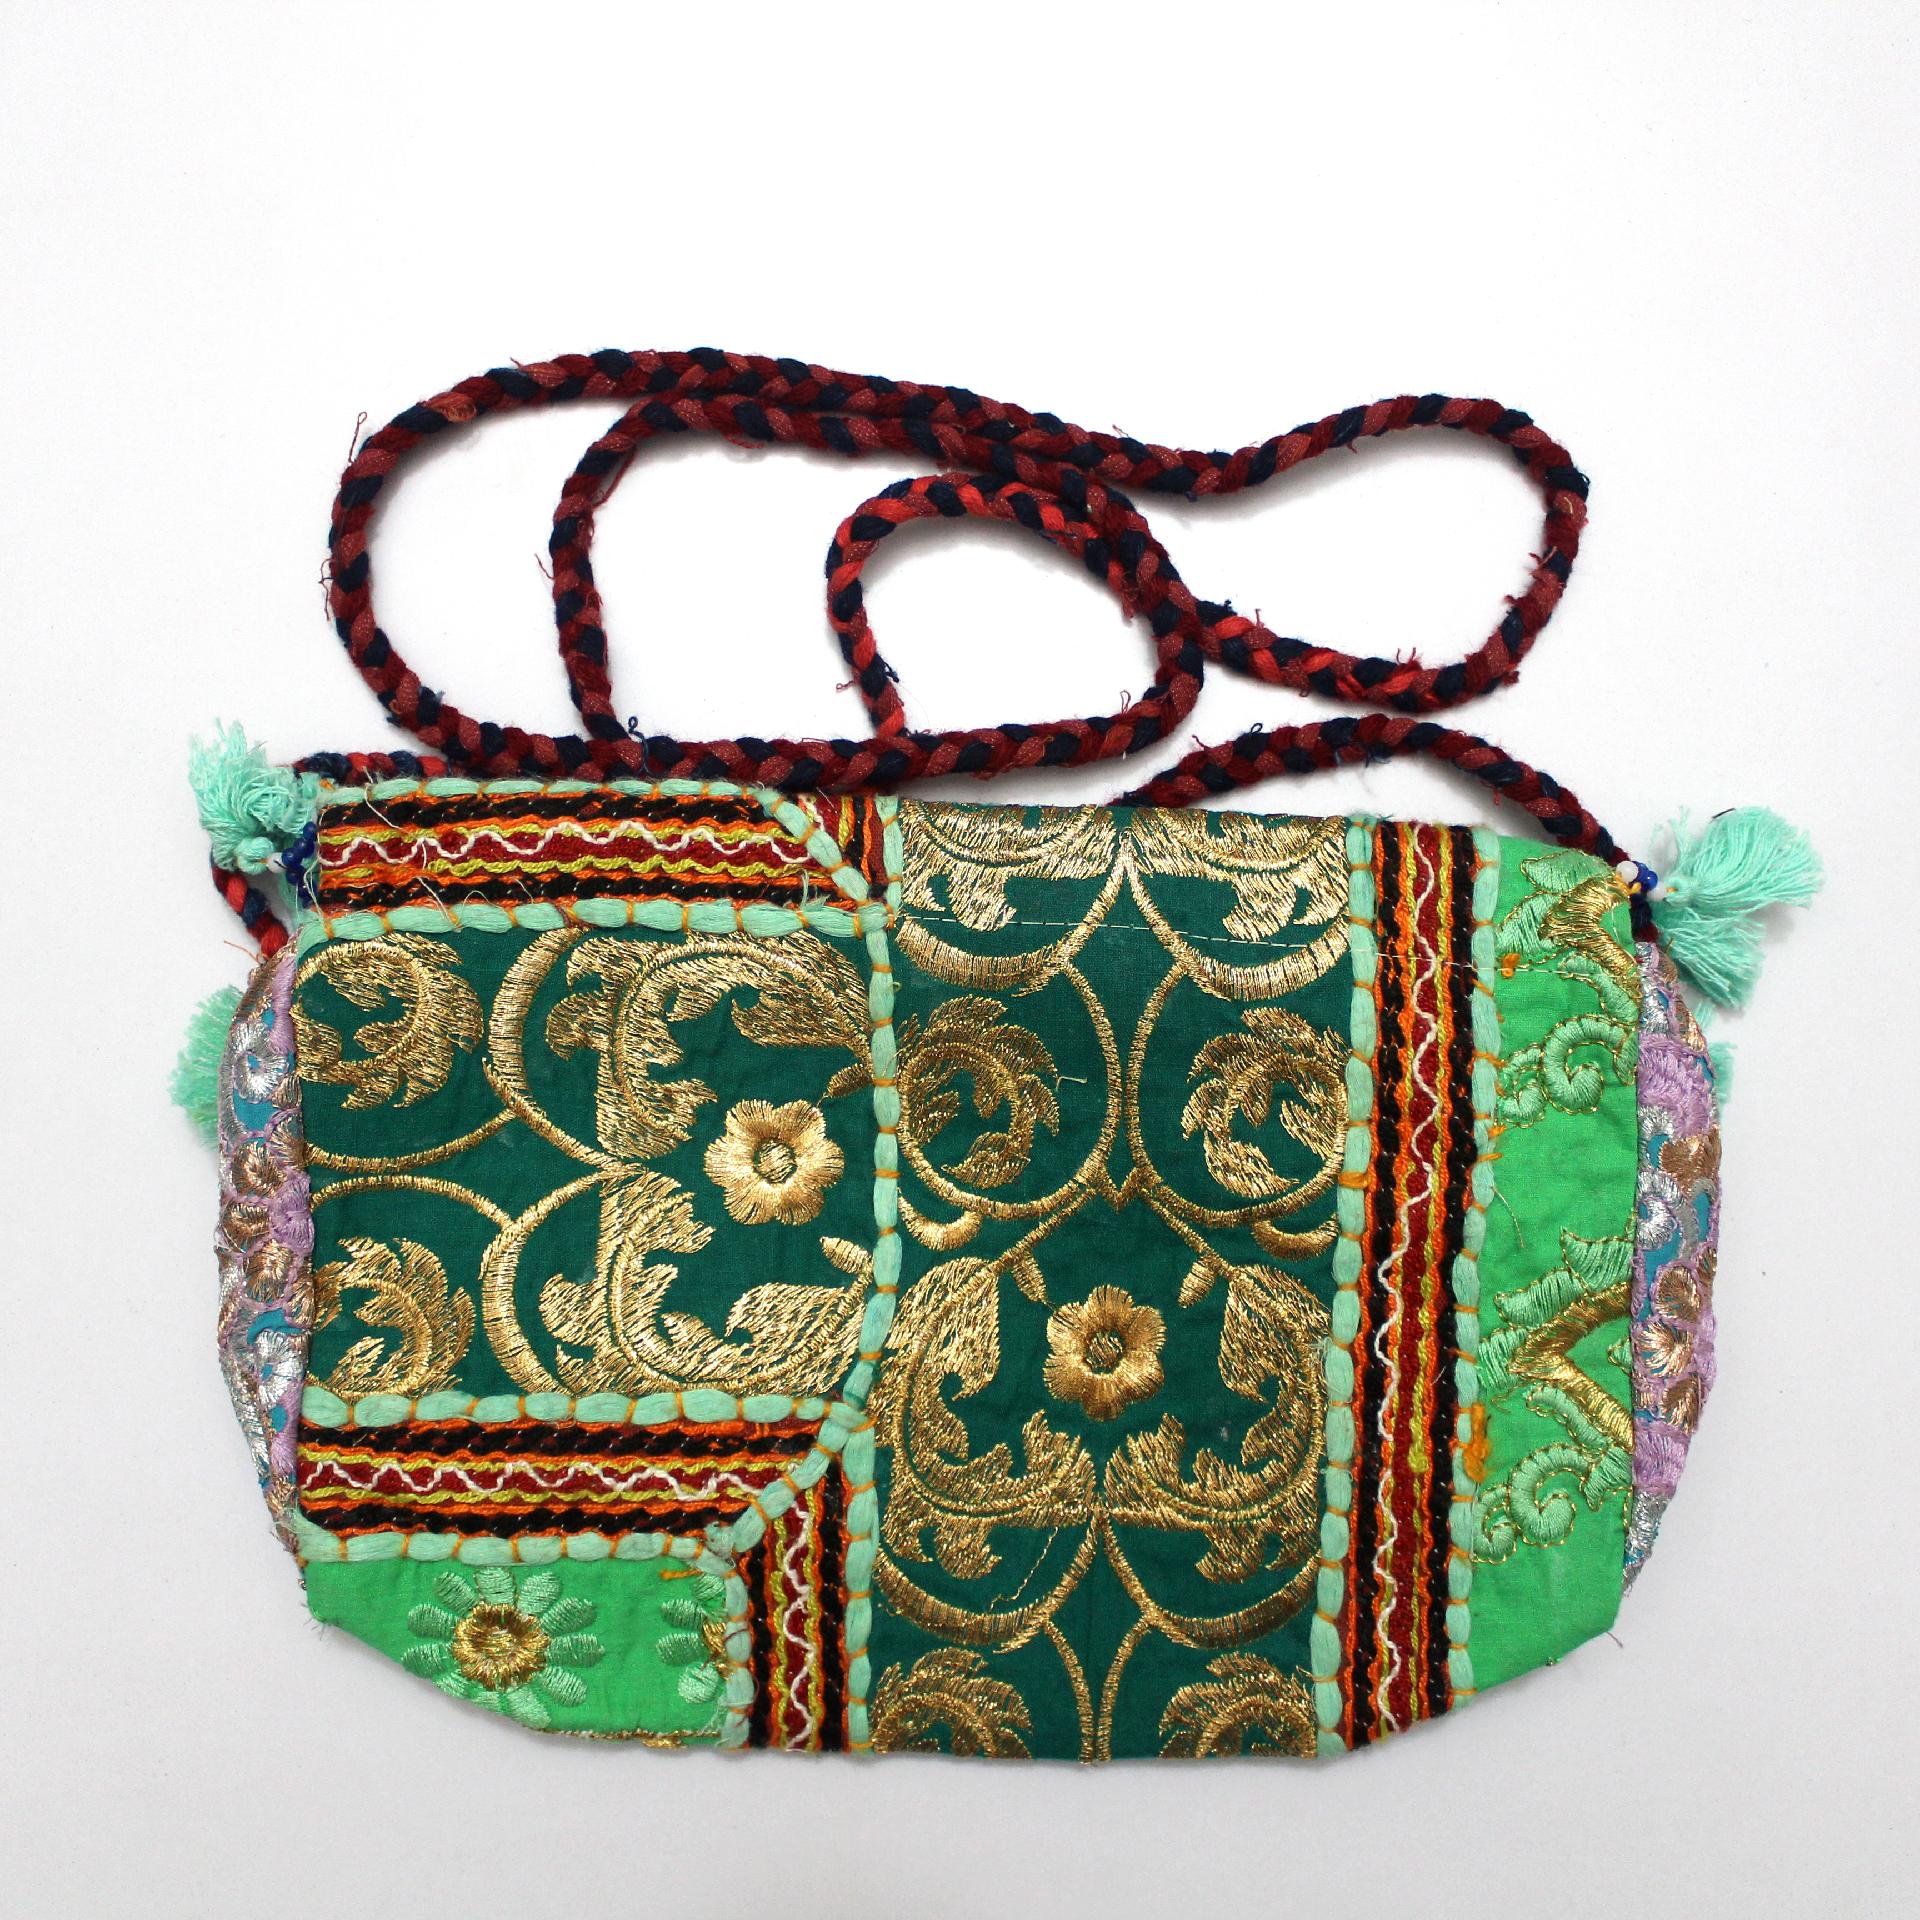 Rajasthani Indian Handmade Ethnic Vintage Banjara Bohemian Foldover Clutch bags